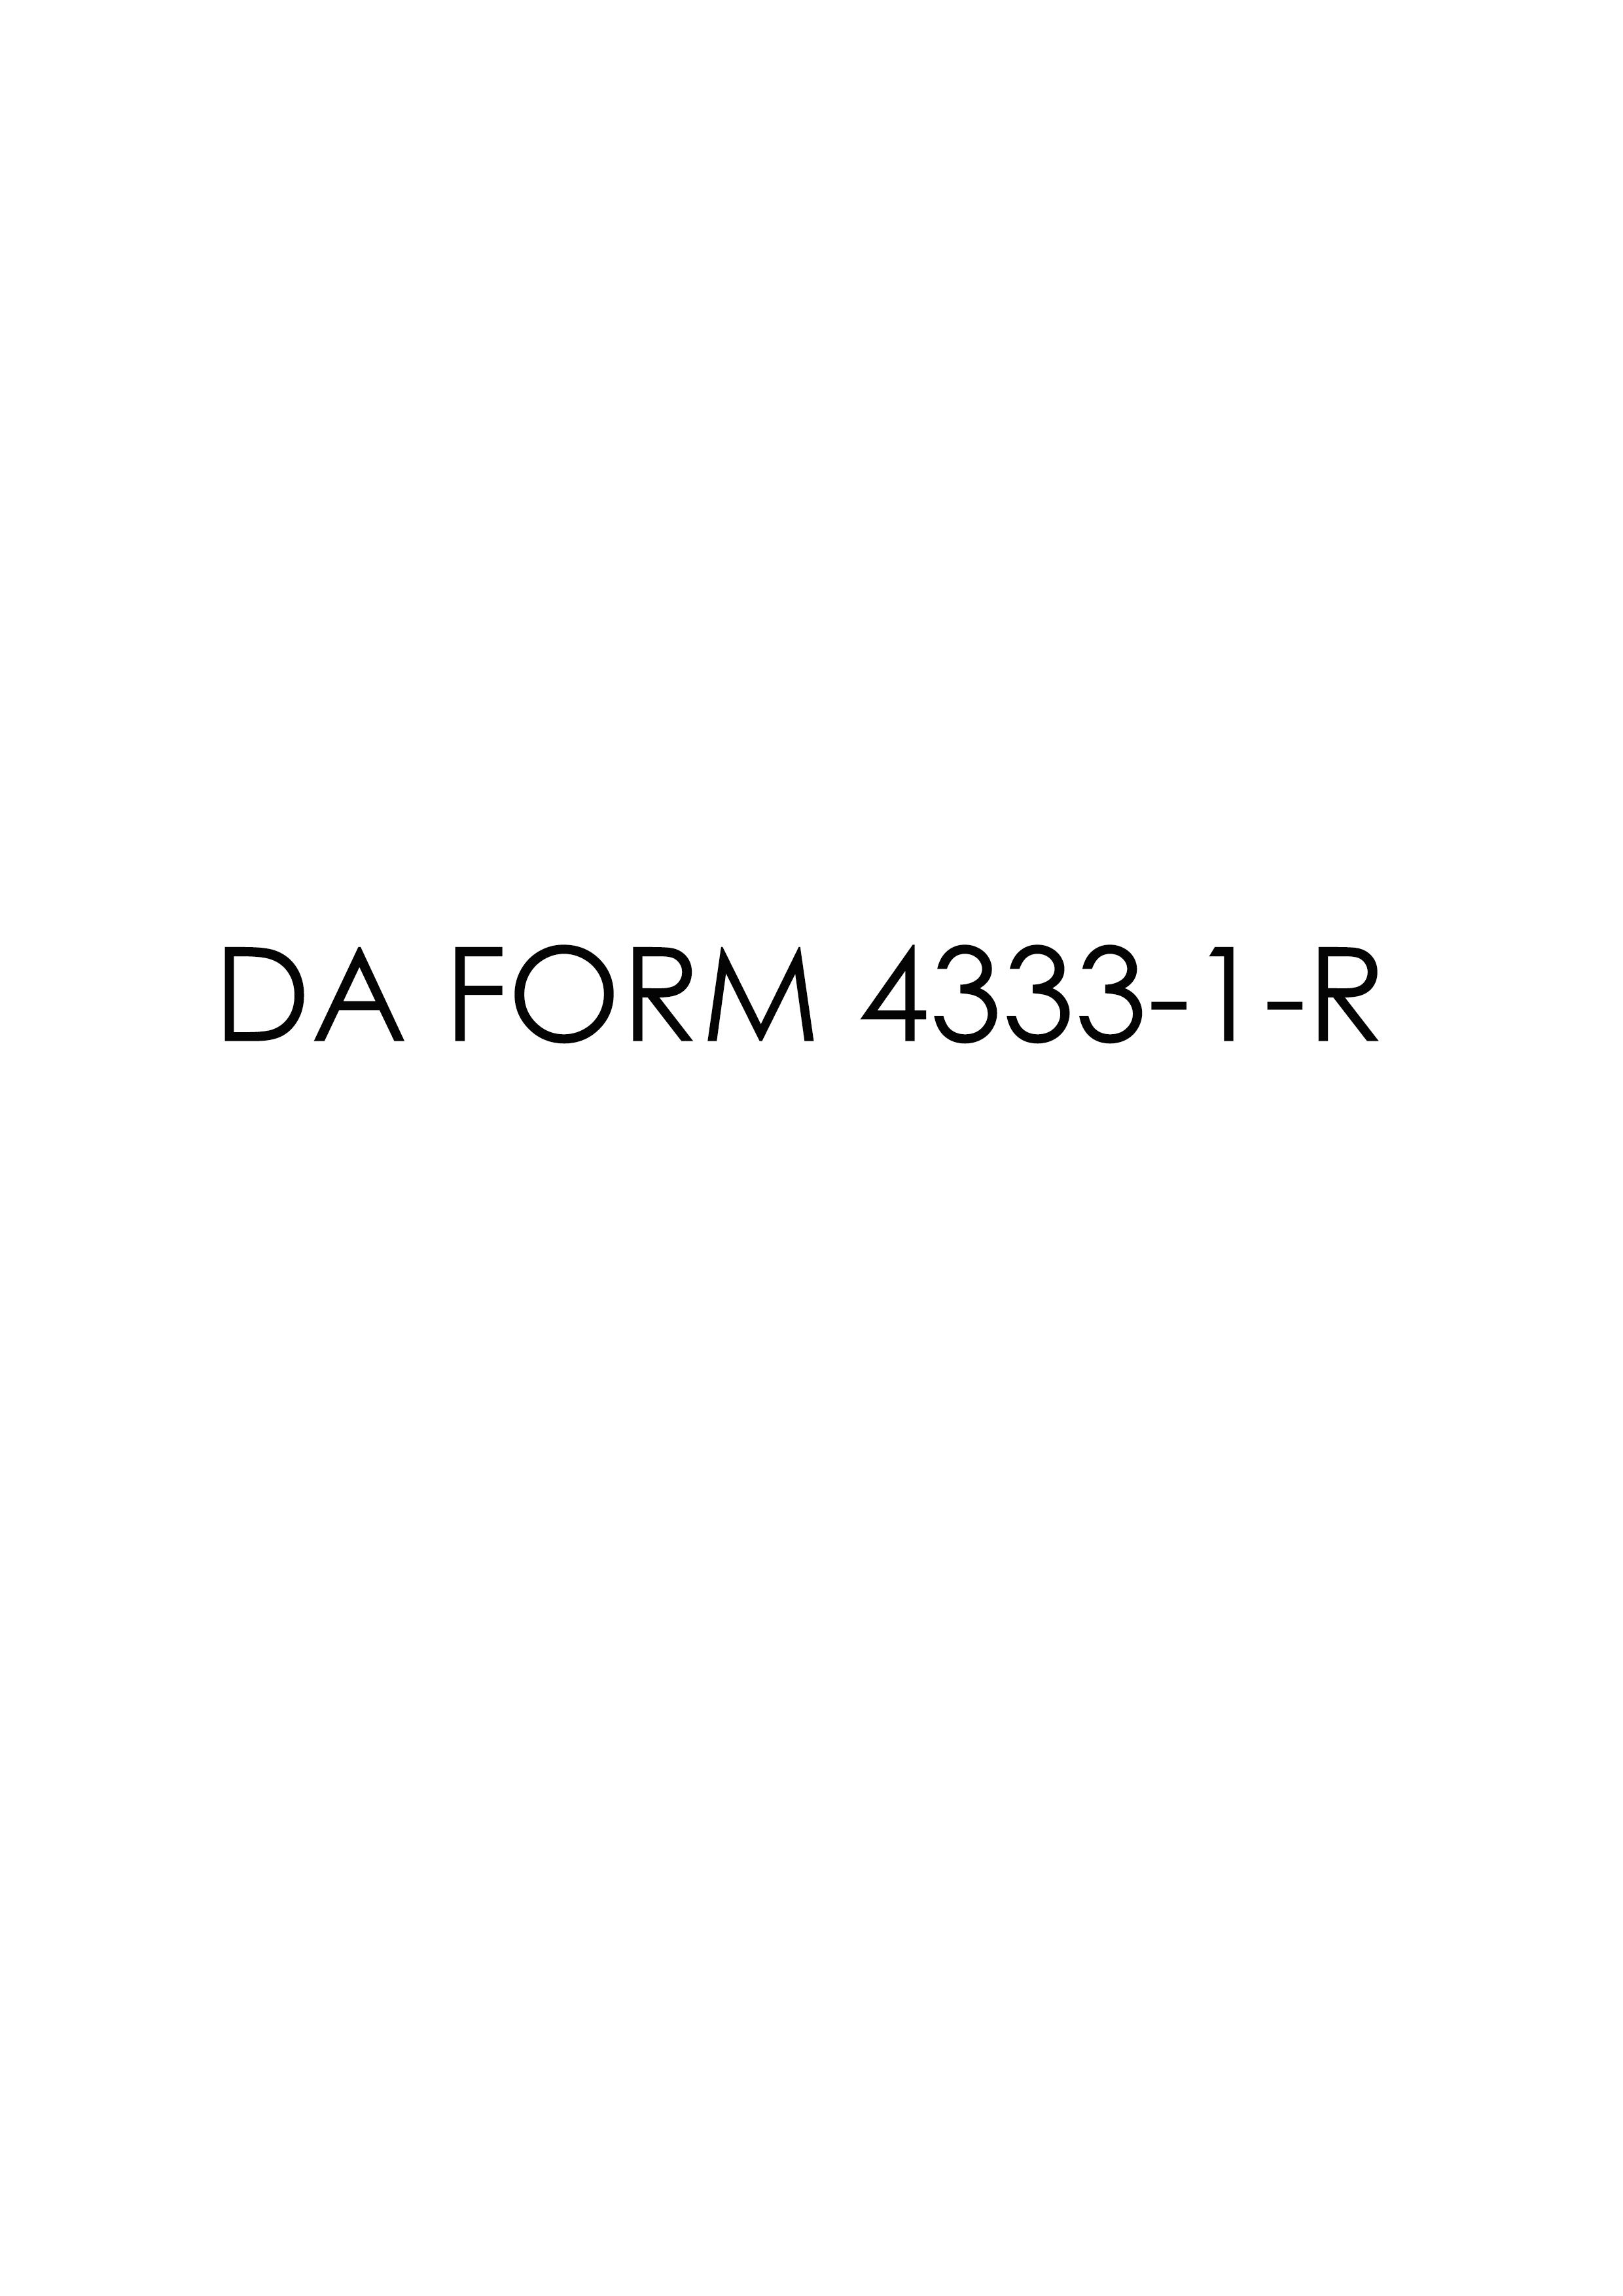 Download Fillable da Form 4333-1-R